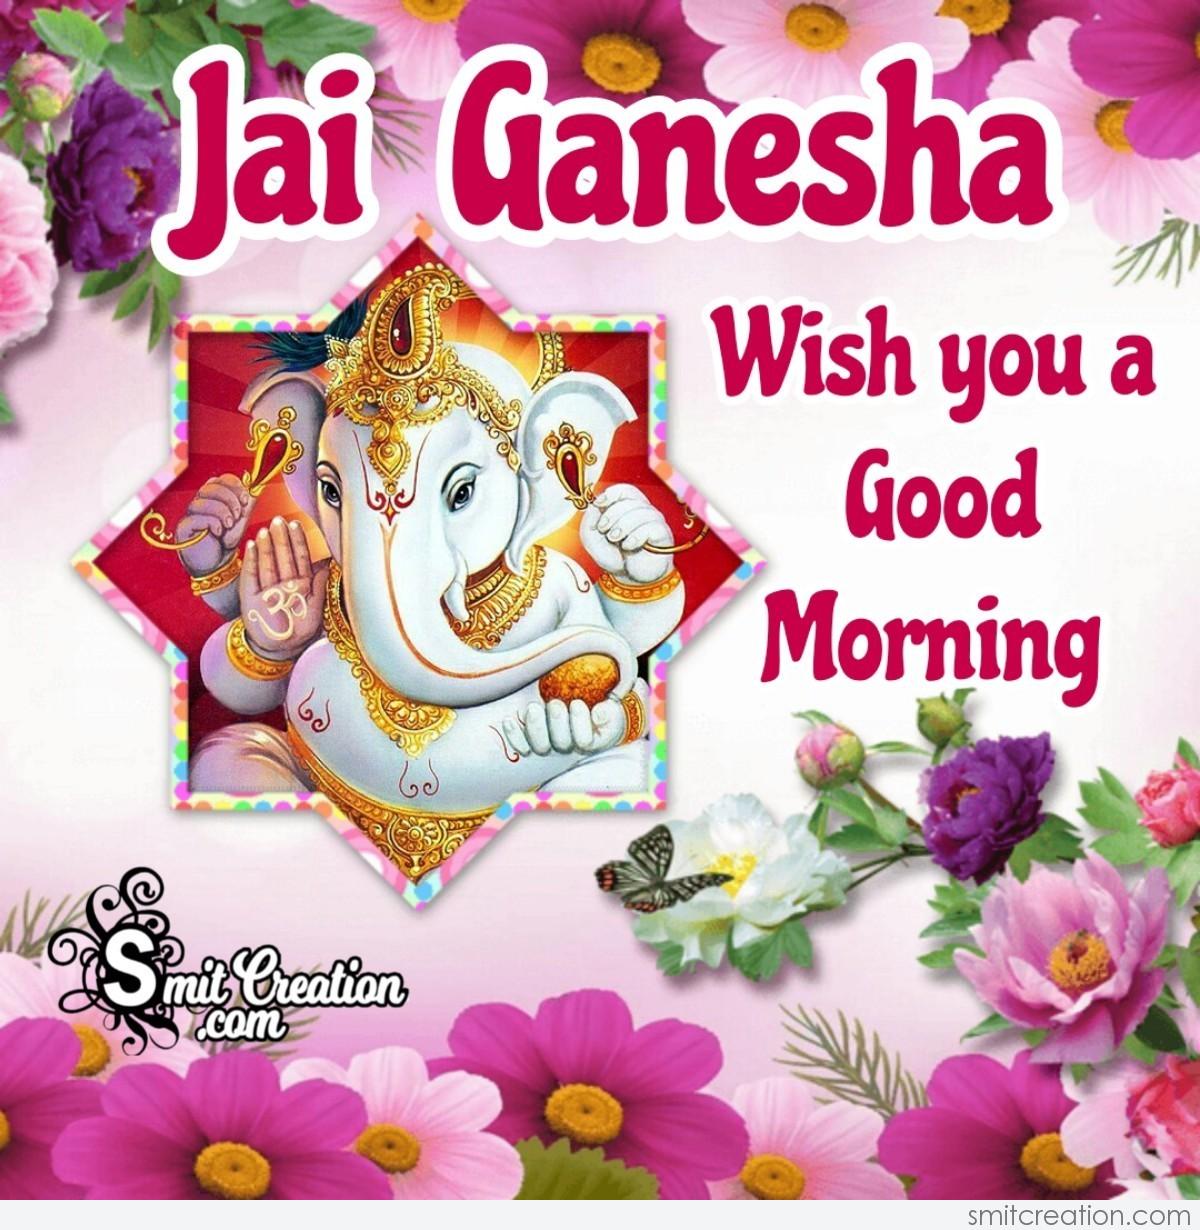 Jai Ganesha Wish You A Good Morning - SmitCreation.com